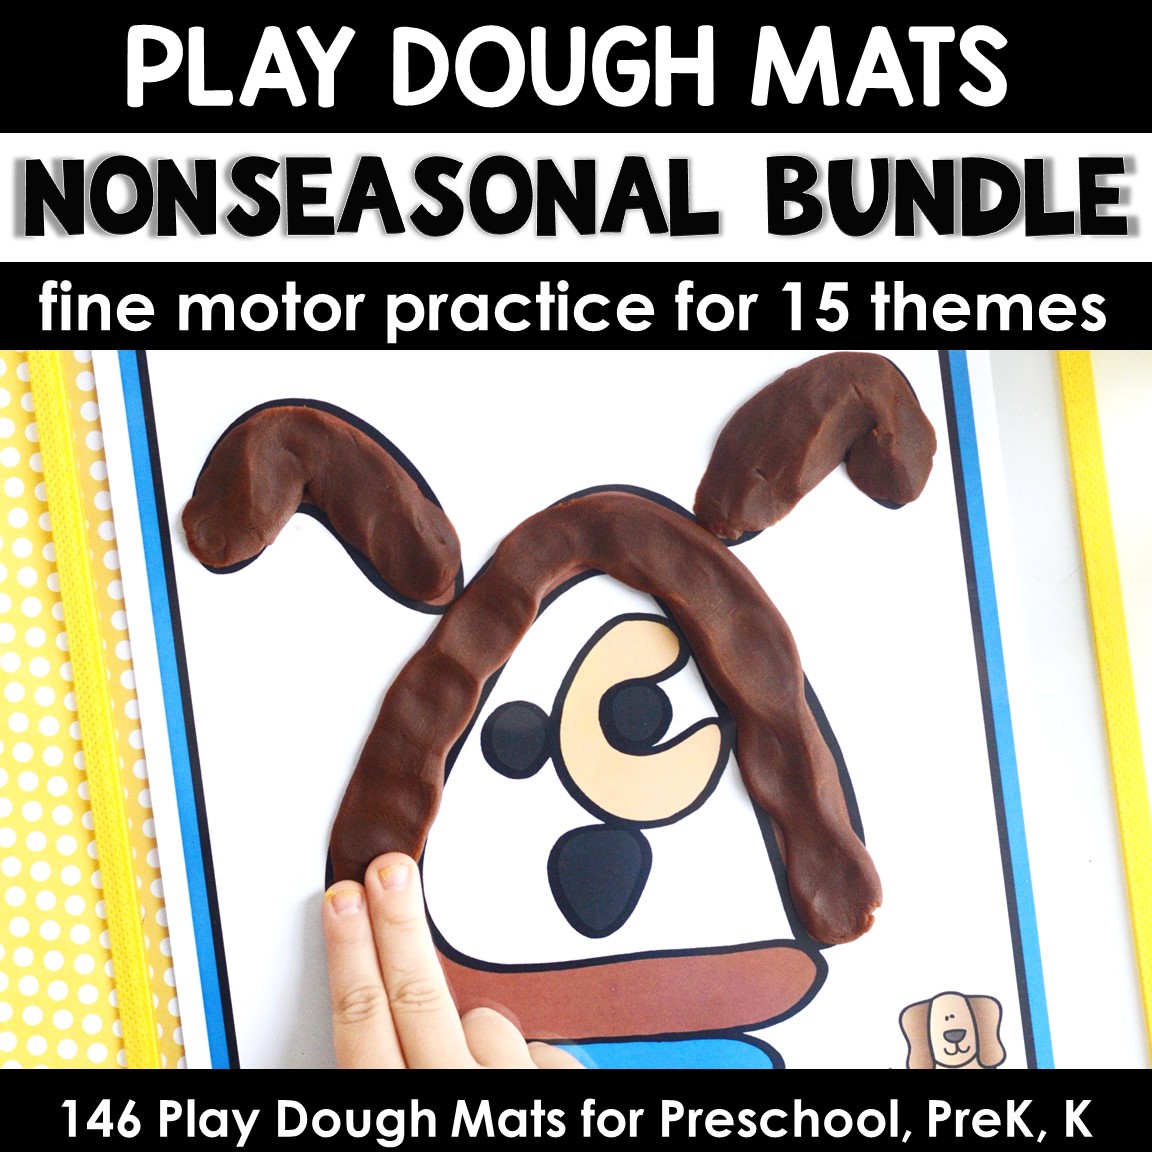 play dough mats non-seasonal bundle product cover